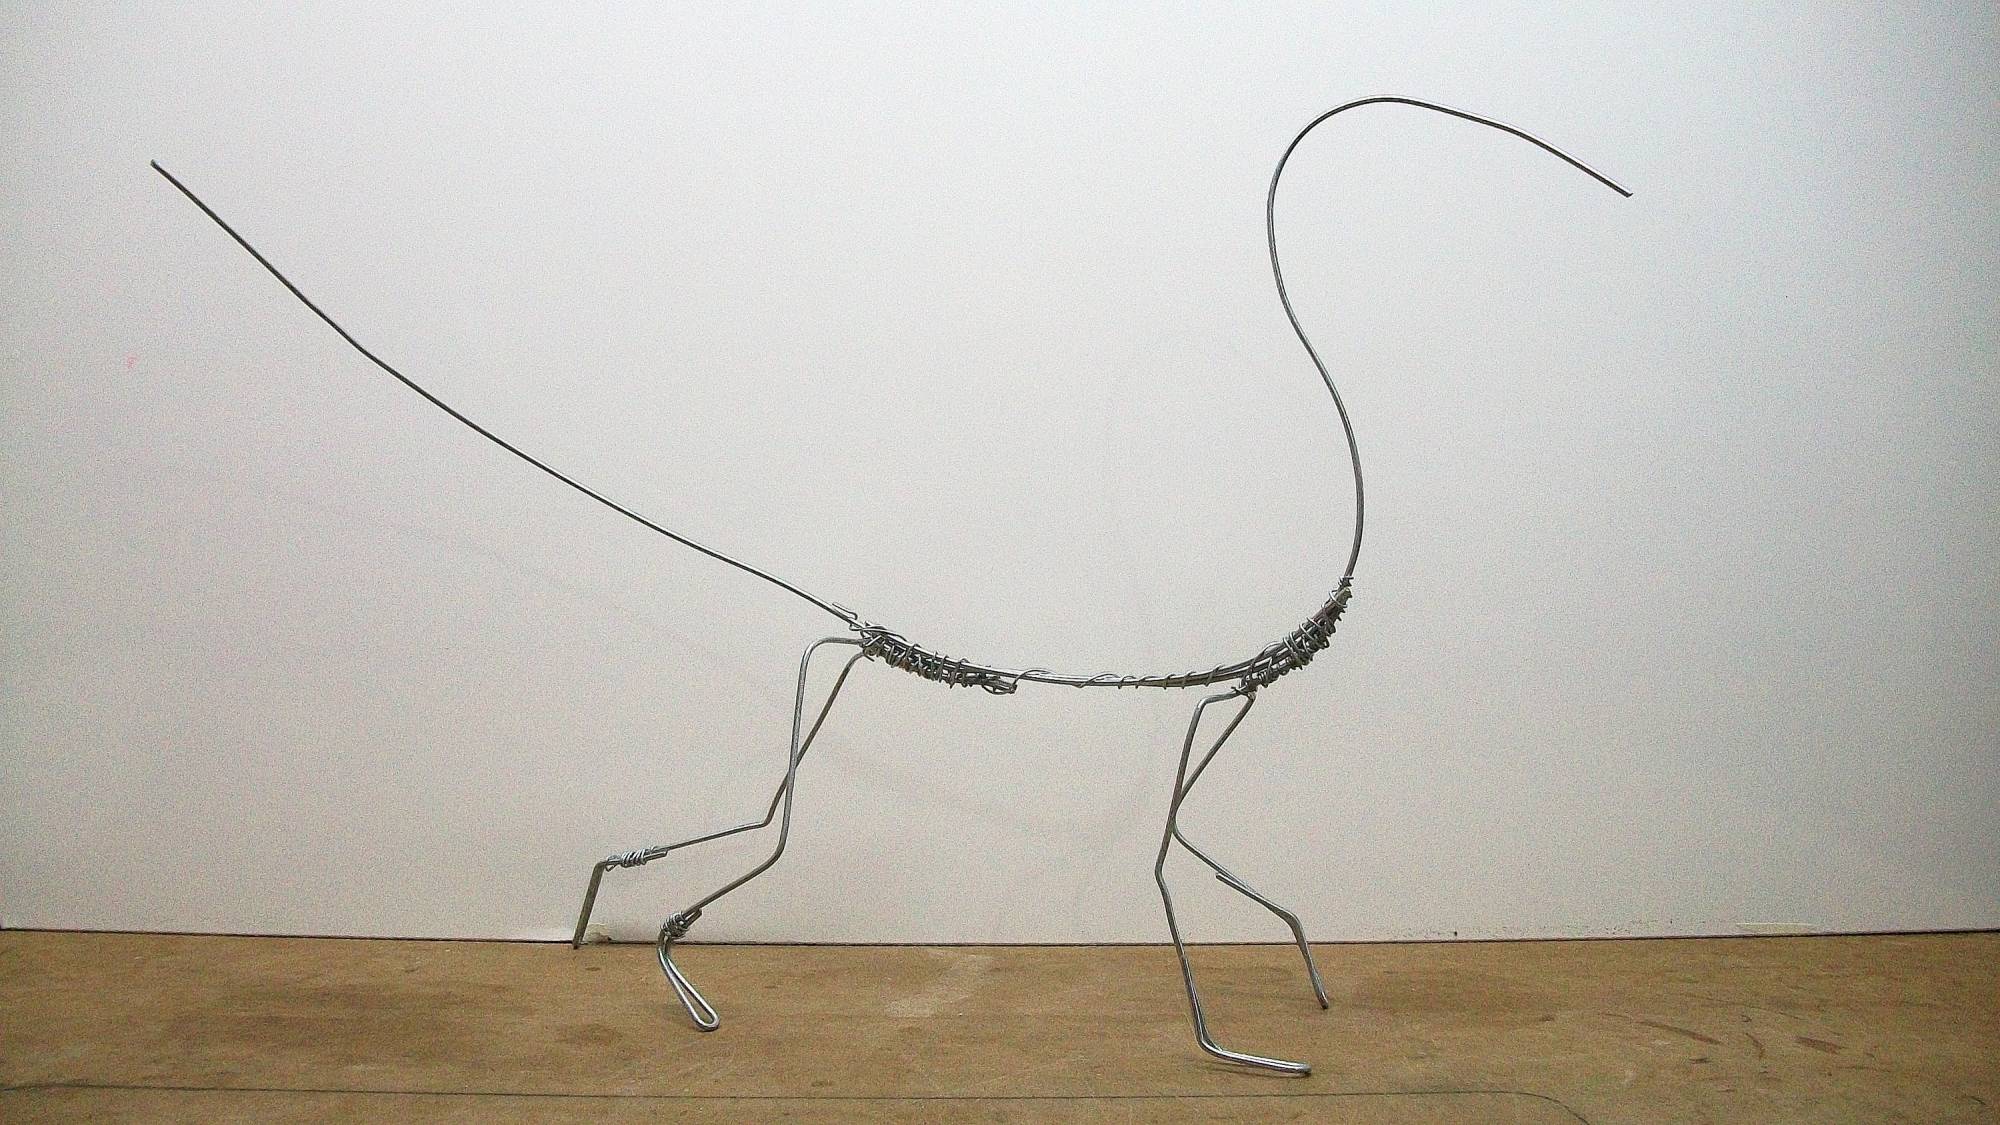 simple wire sculpture art